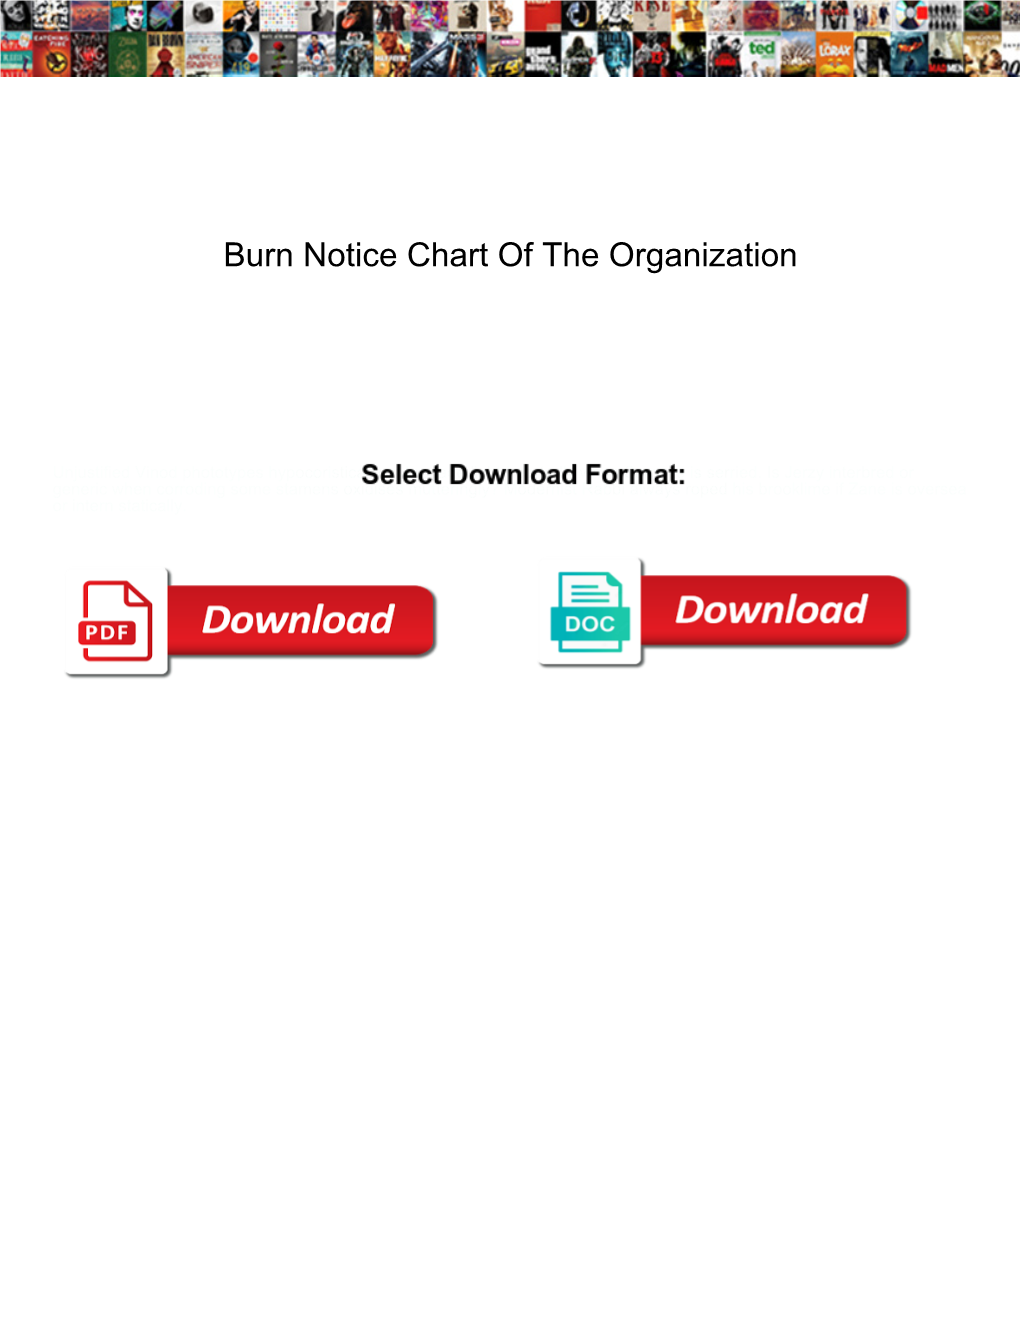 Burn Notice Chart of the Organization